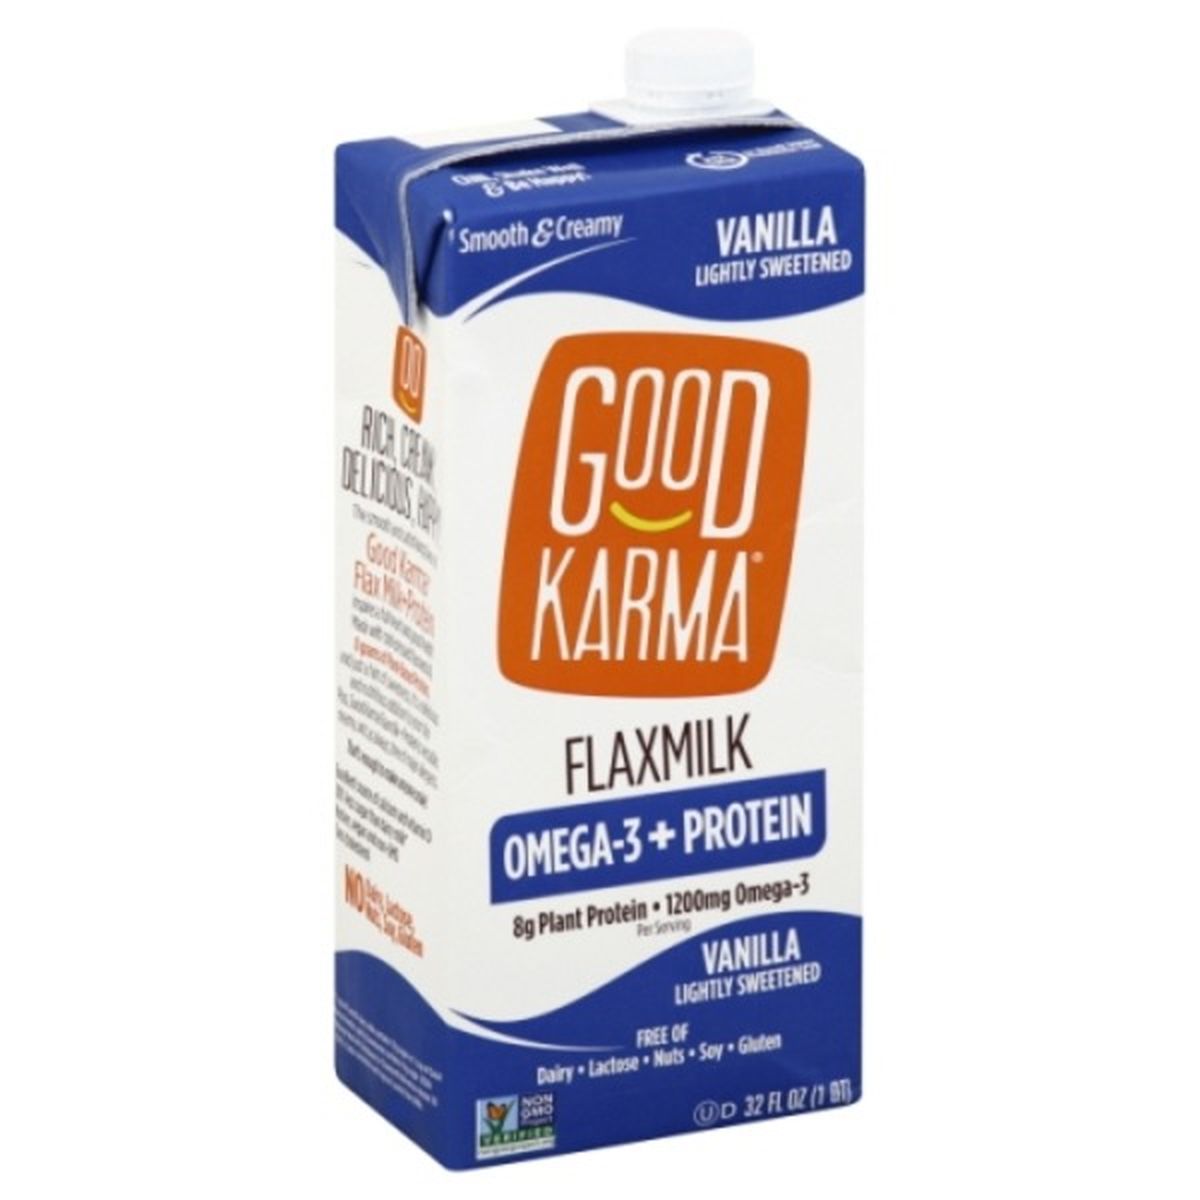 Calories in Good Karma Flaxmilk, Lightly Sweetened, Vanilla